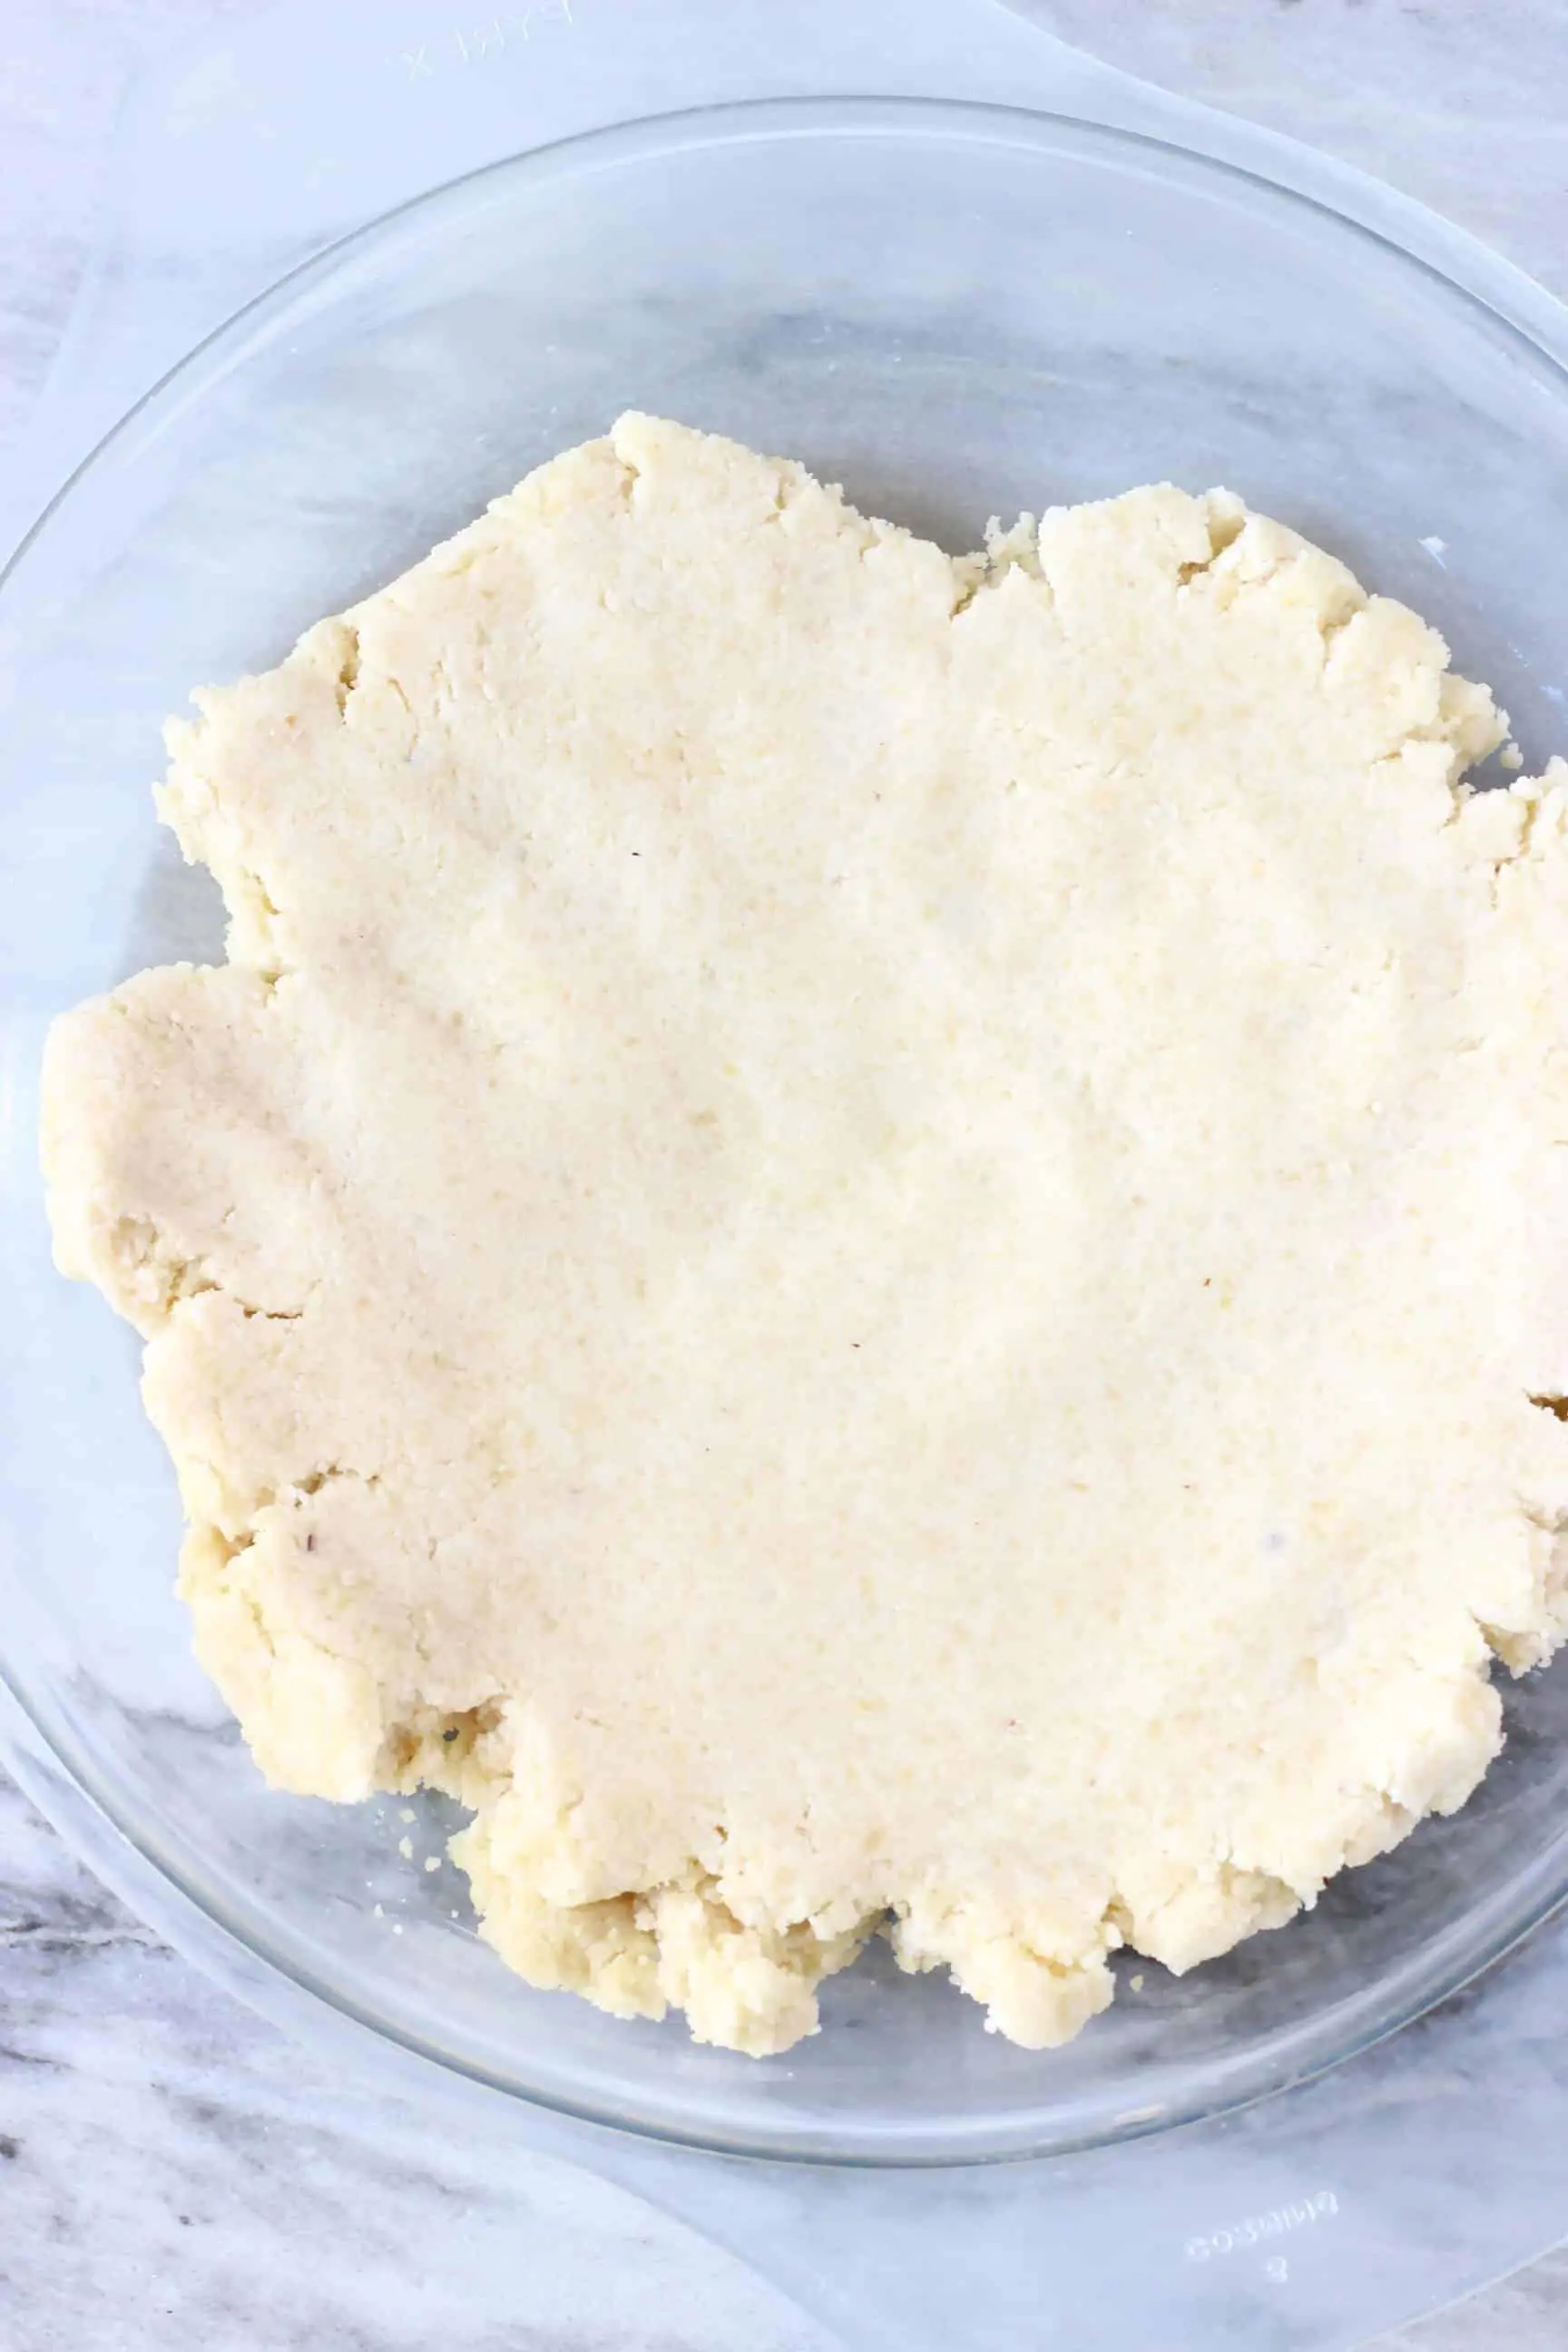 Raw gluten-free vegan pastry dough in a pie dish